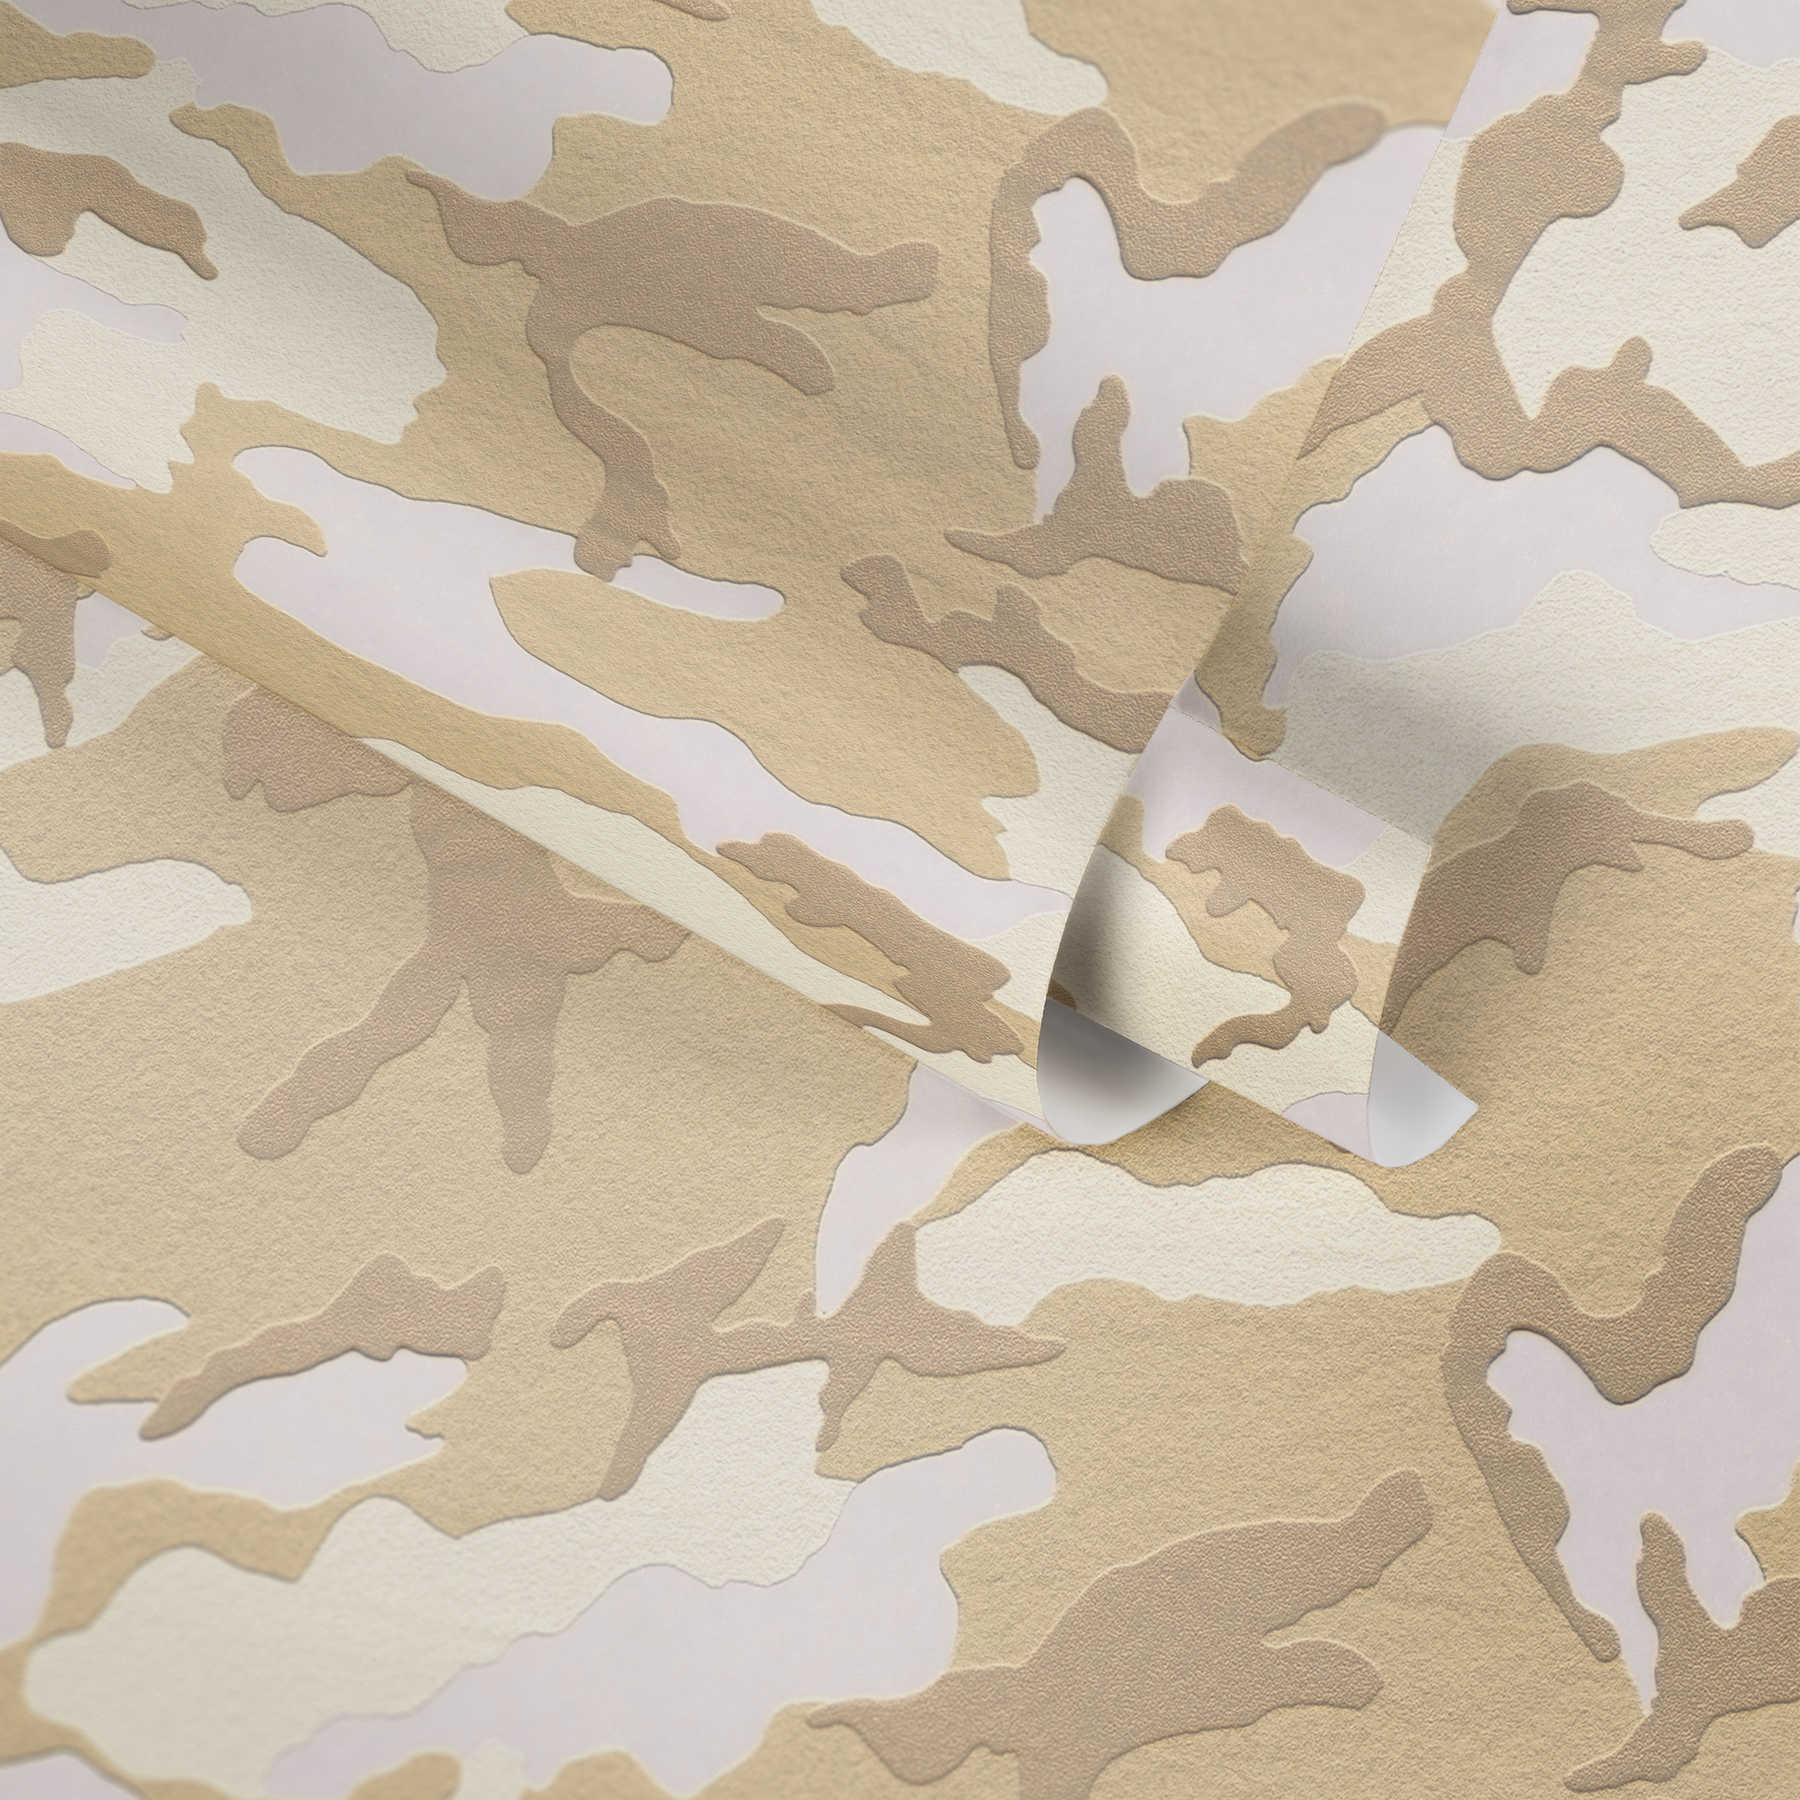             Wallpaper camouflage pattern desert, camouflage wallpaper - beige, brown
        